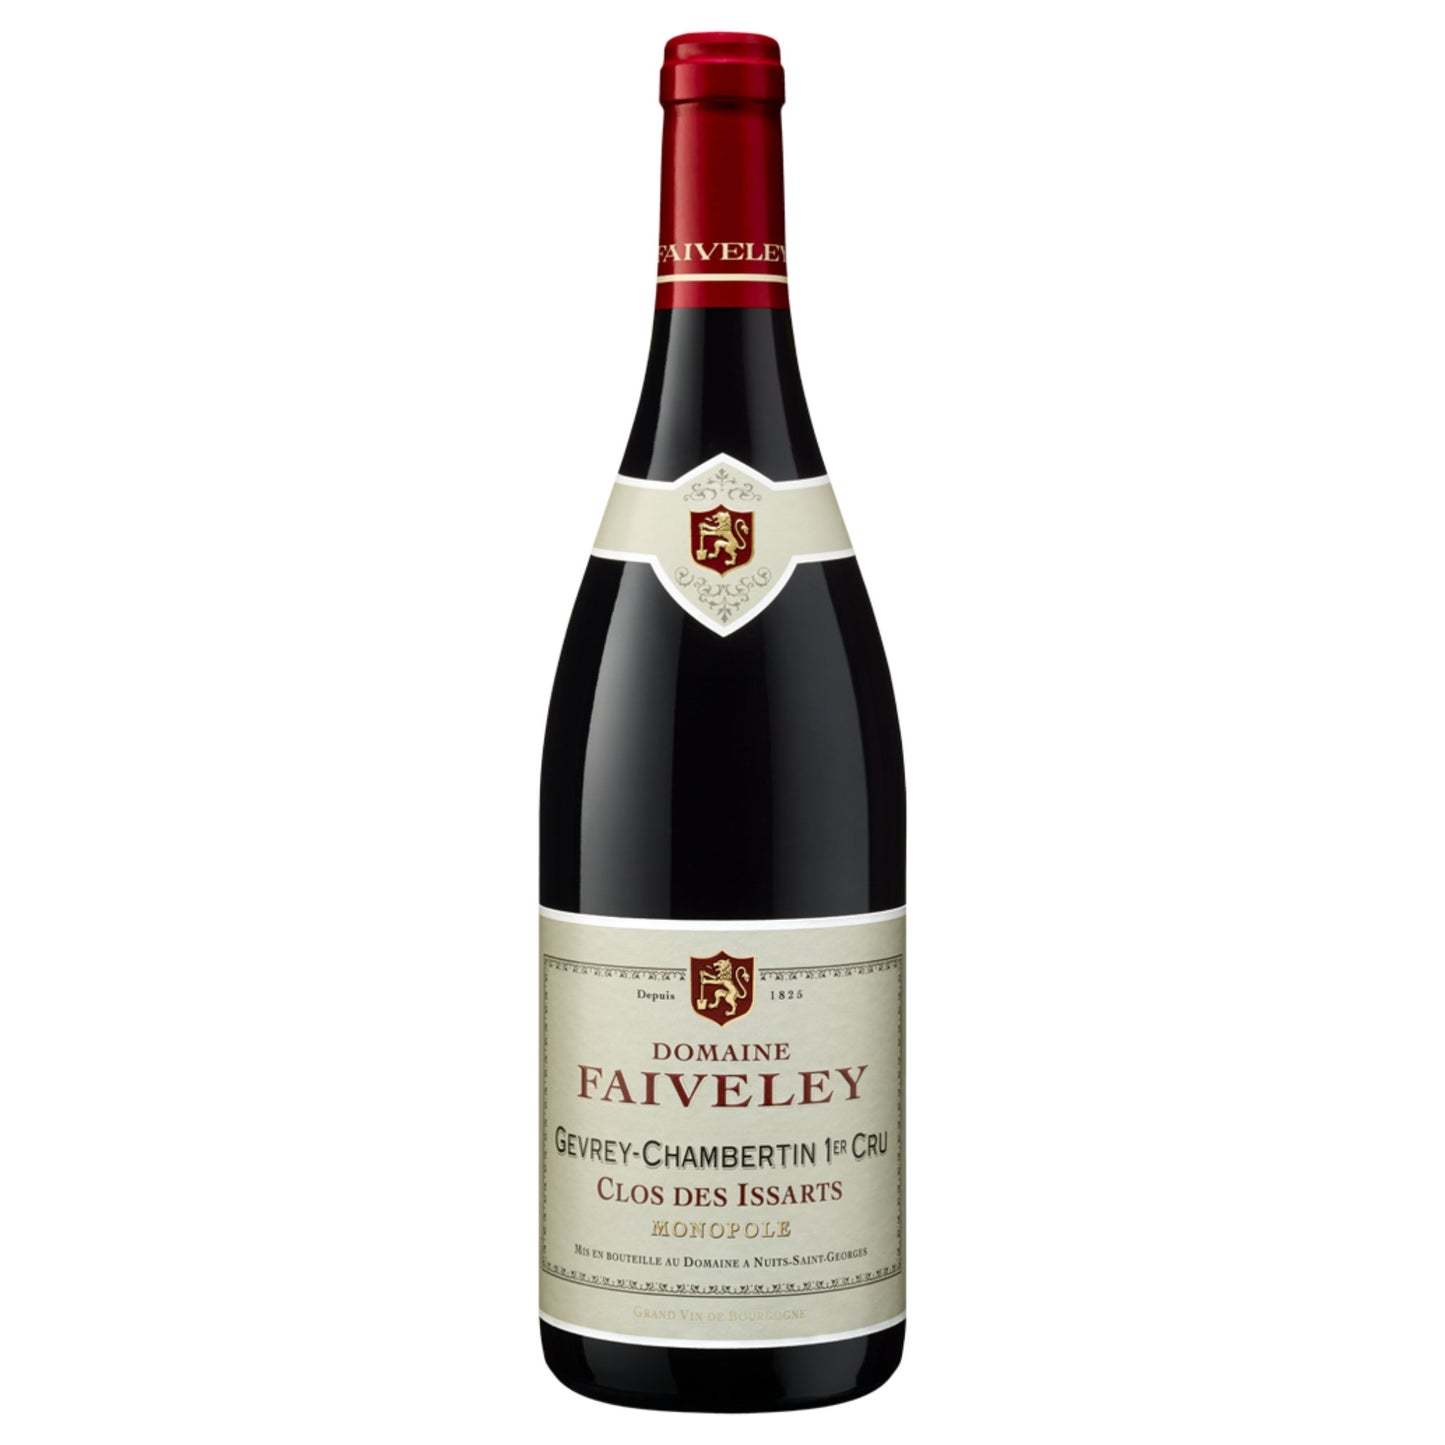 Faiveley Gevrey-Chambertin 1er Cru "Clos des Issarts" Monopole - Grand Vin Pte Ltd